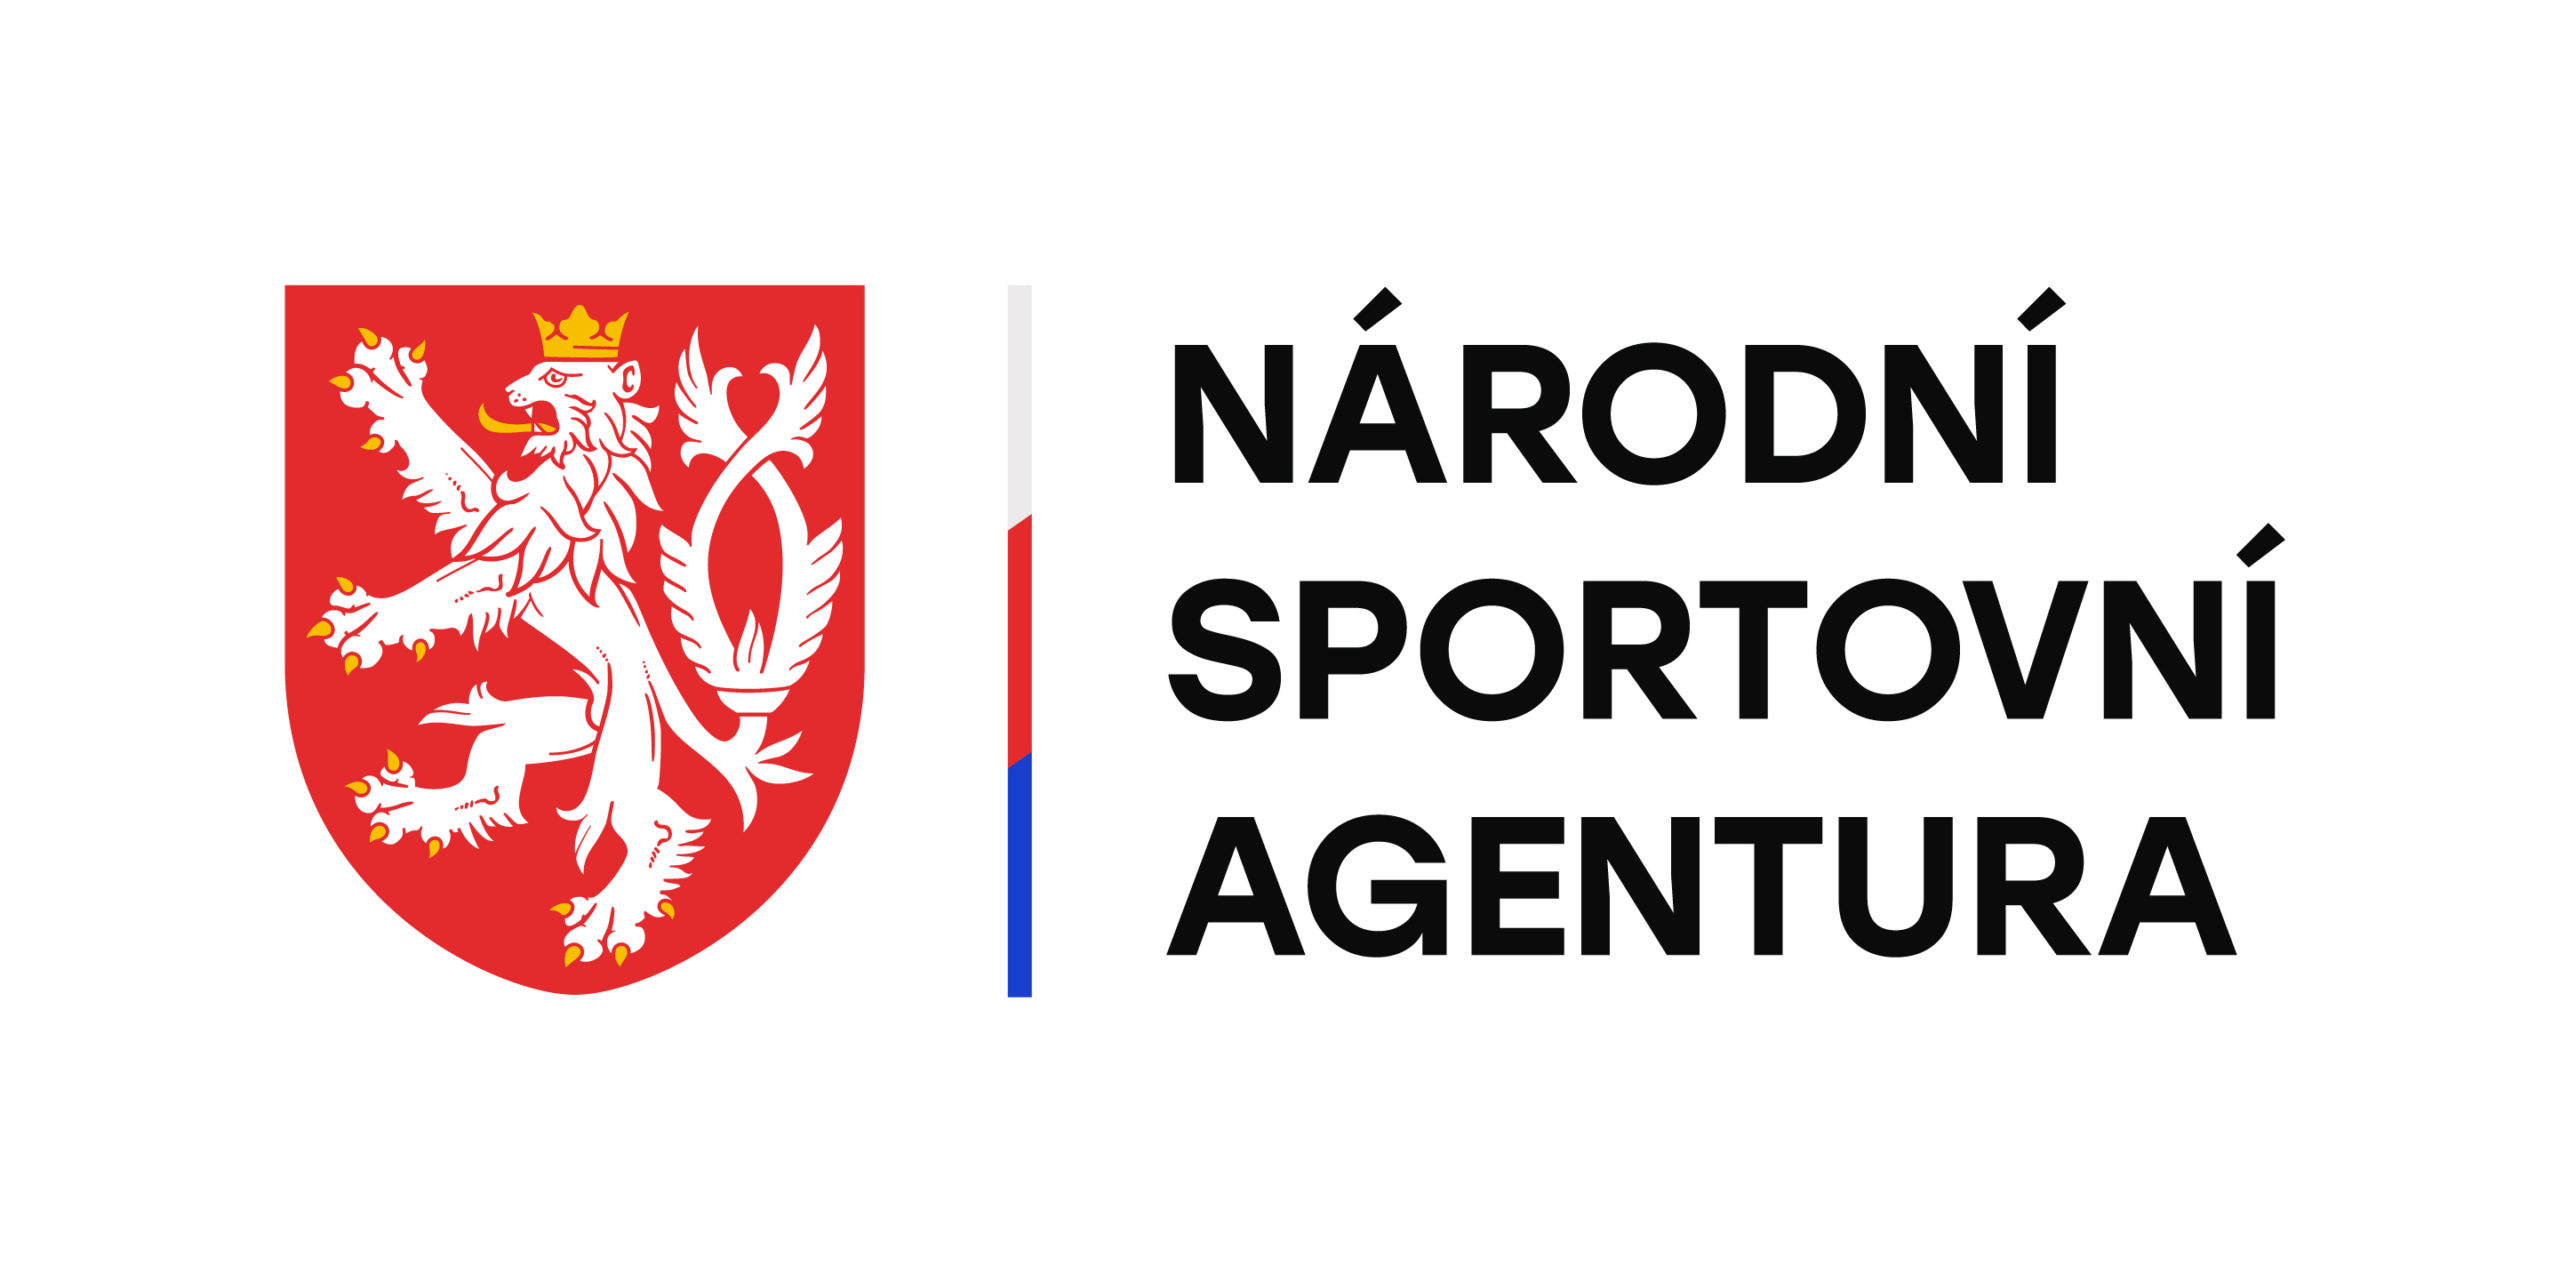 Narodni sportovni agentura_logo rgb